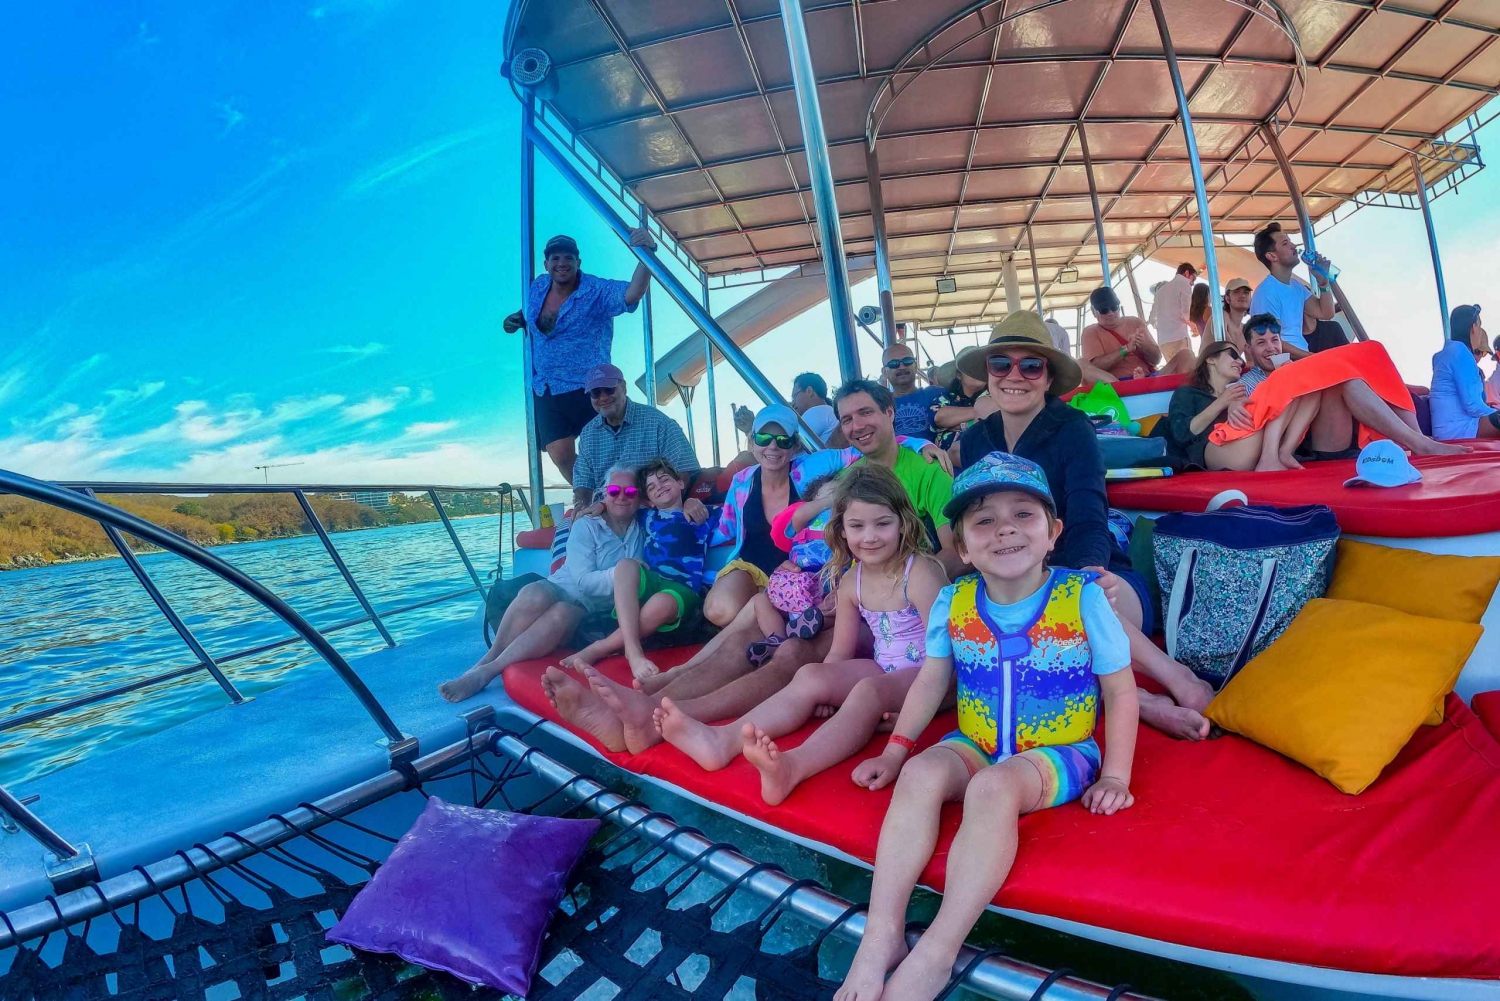 La Cruz de Huanacaxtle: Full-Day Marietas Islands Boat Tour